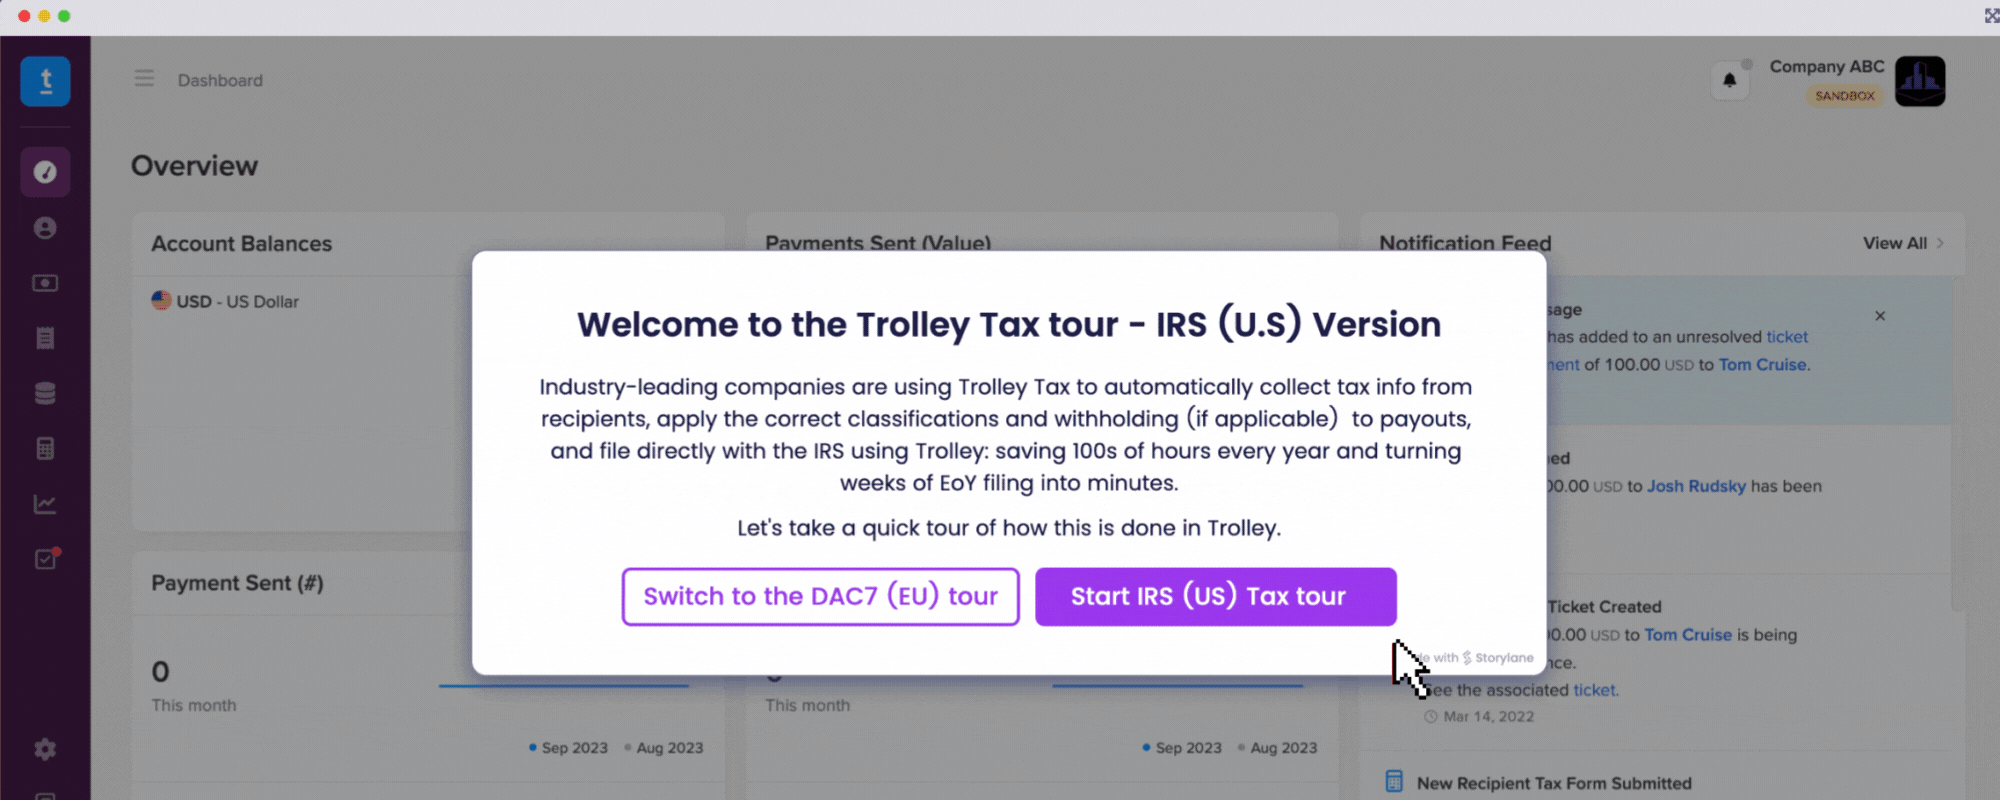 Trolley Tax tour